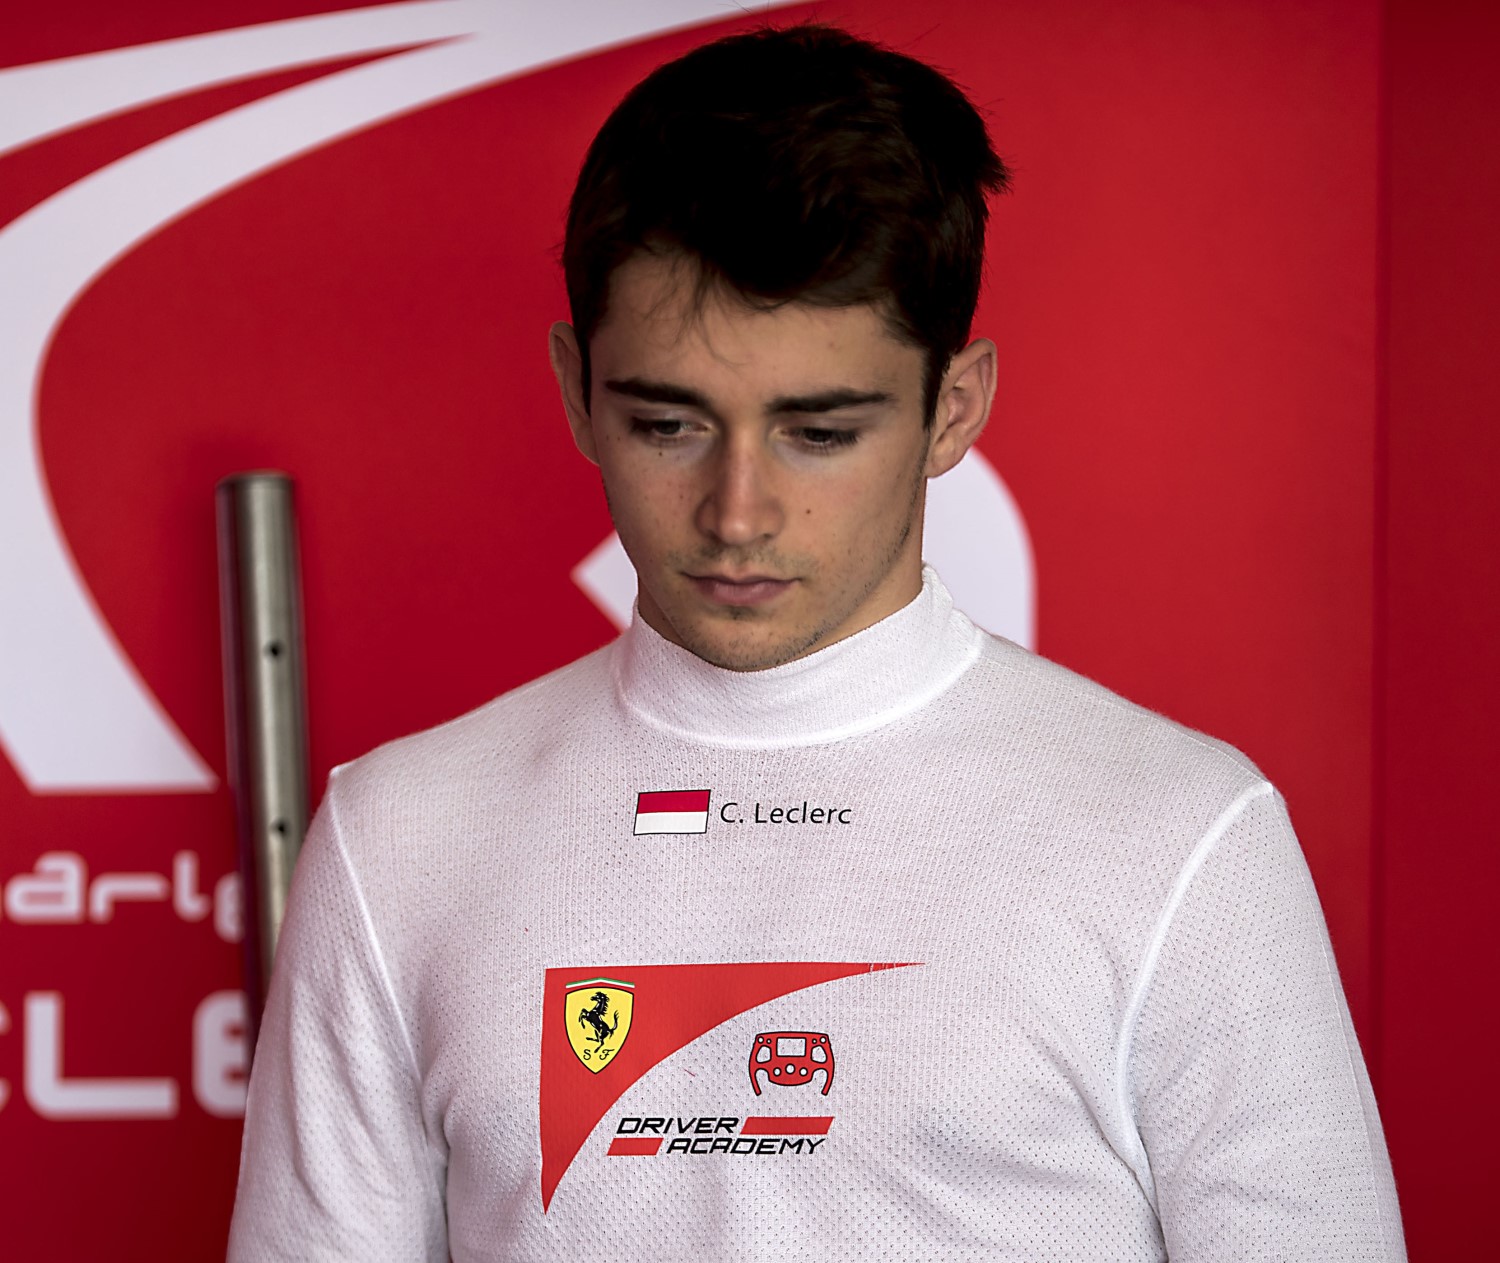 Ferrari protege Charles Leclerc